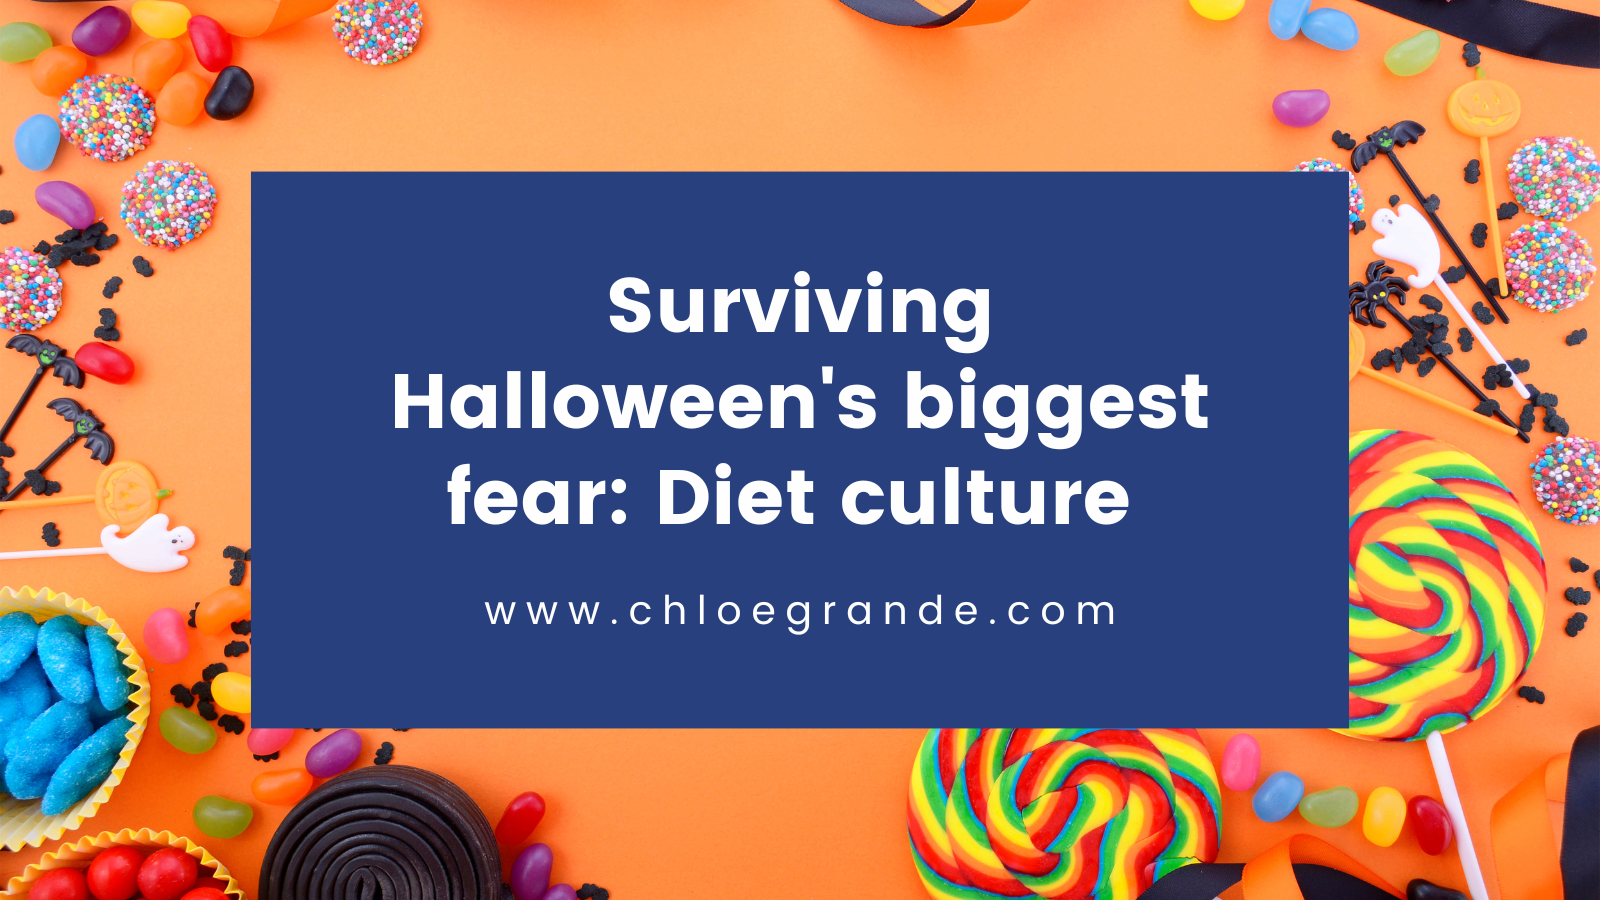 Surviving Halloween's biggest fear: diet culture